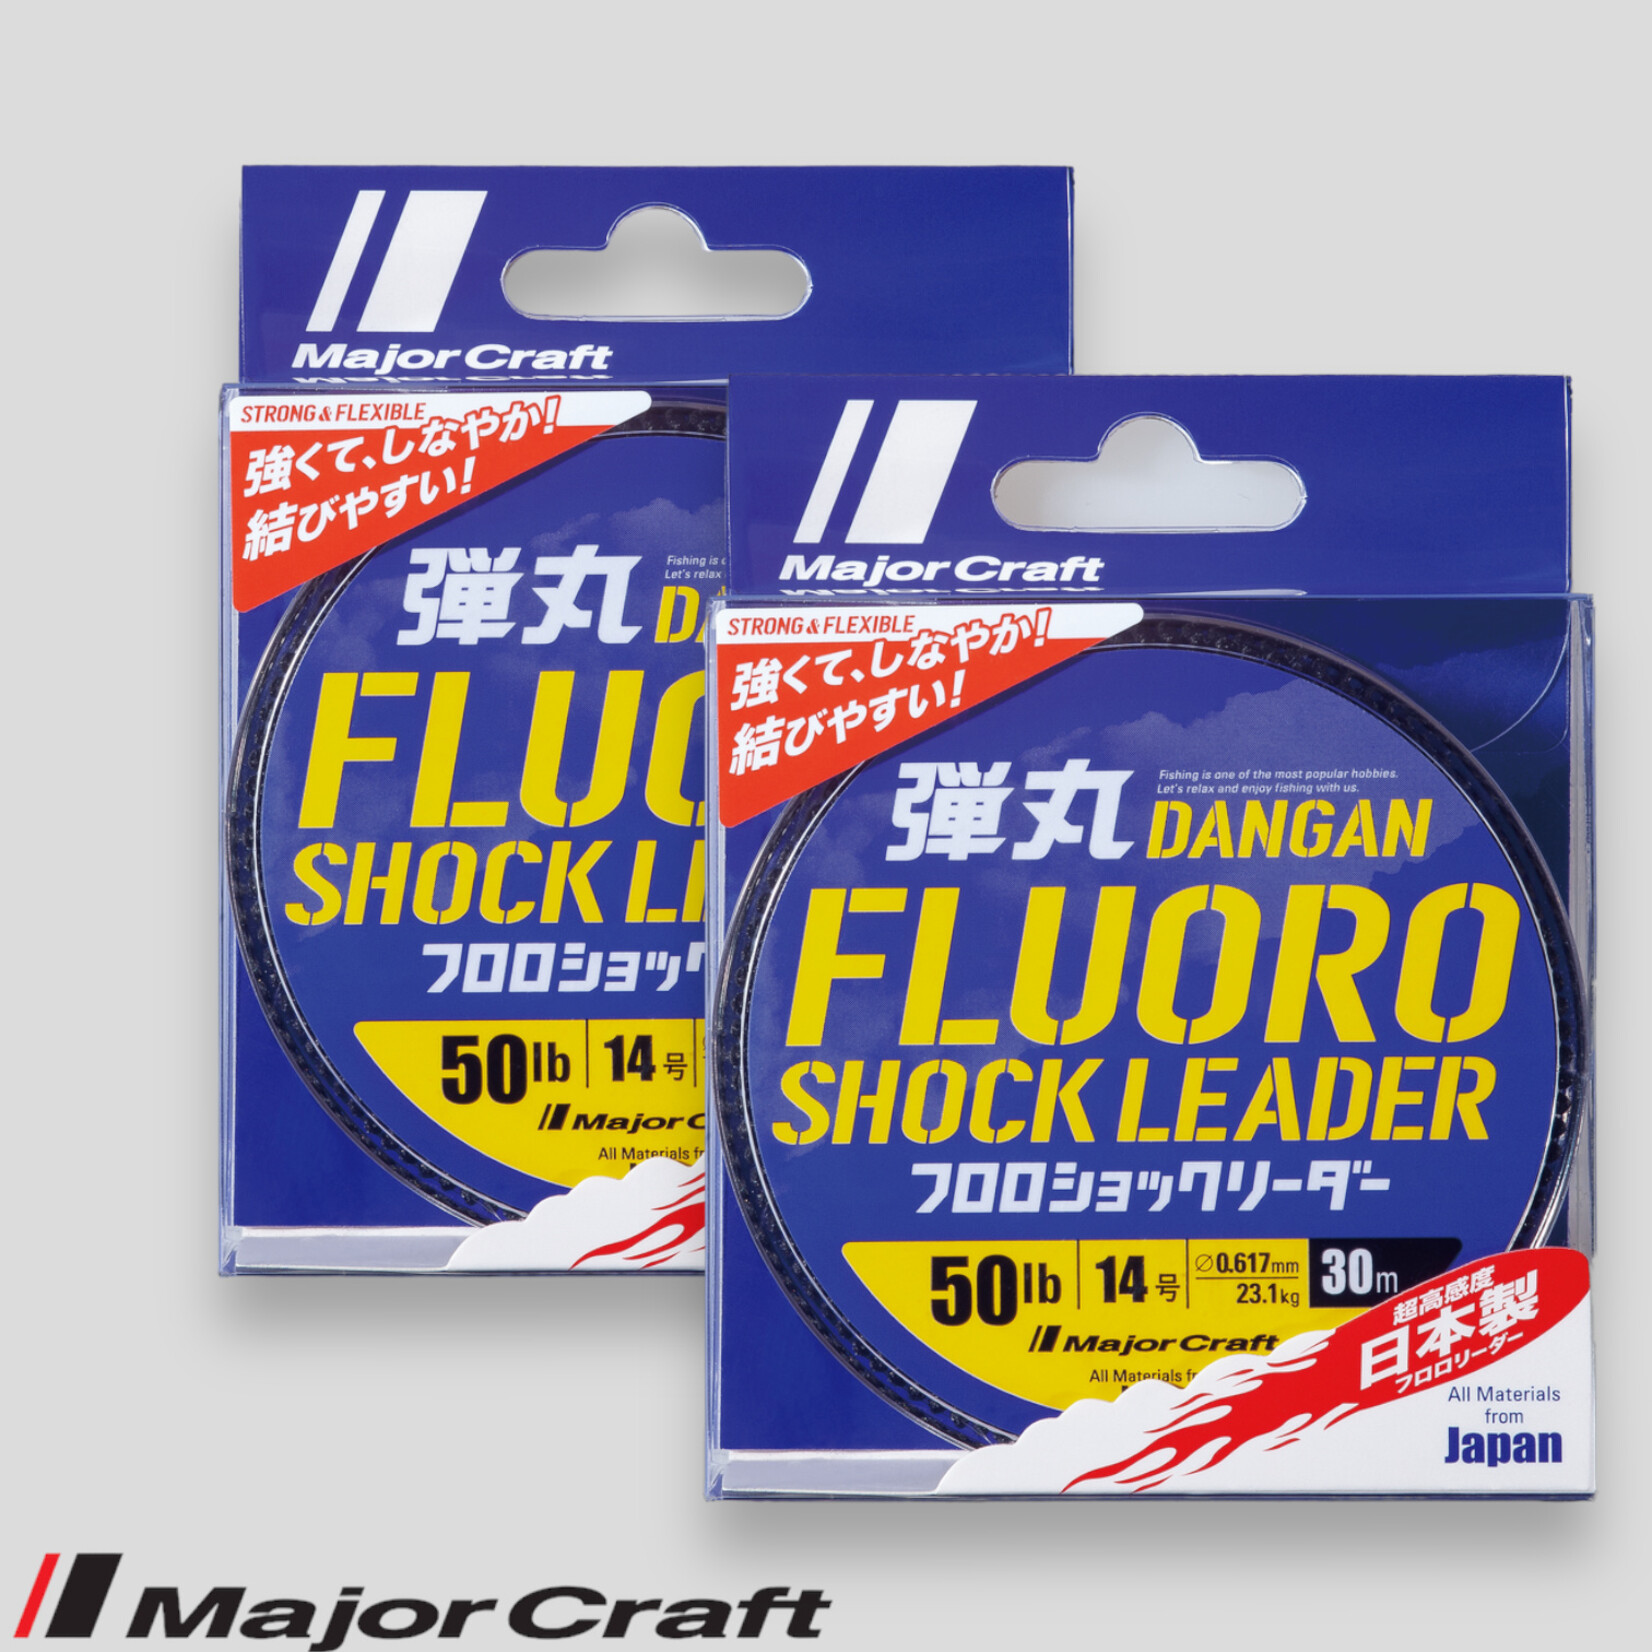 Major Craft Major Craft Dangan Fluoro Shock Leader (30M)